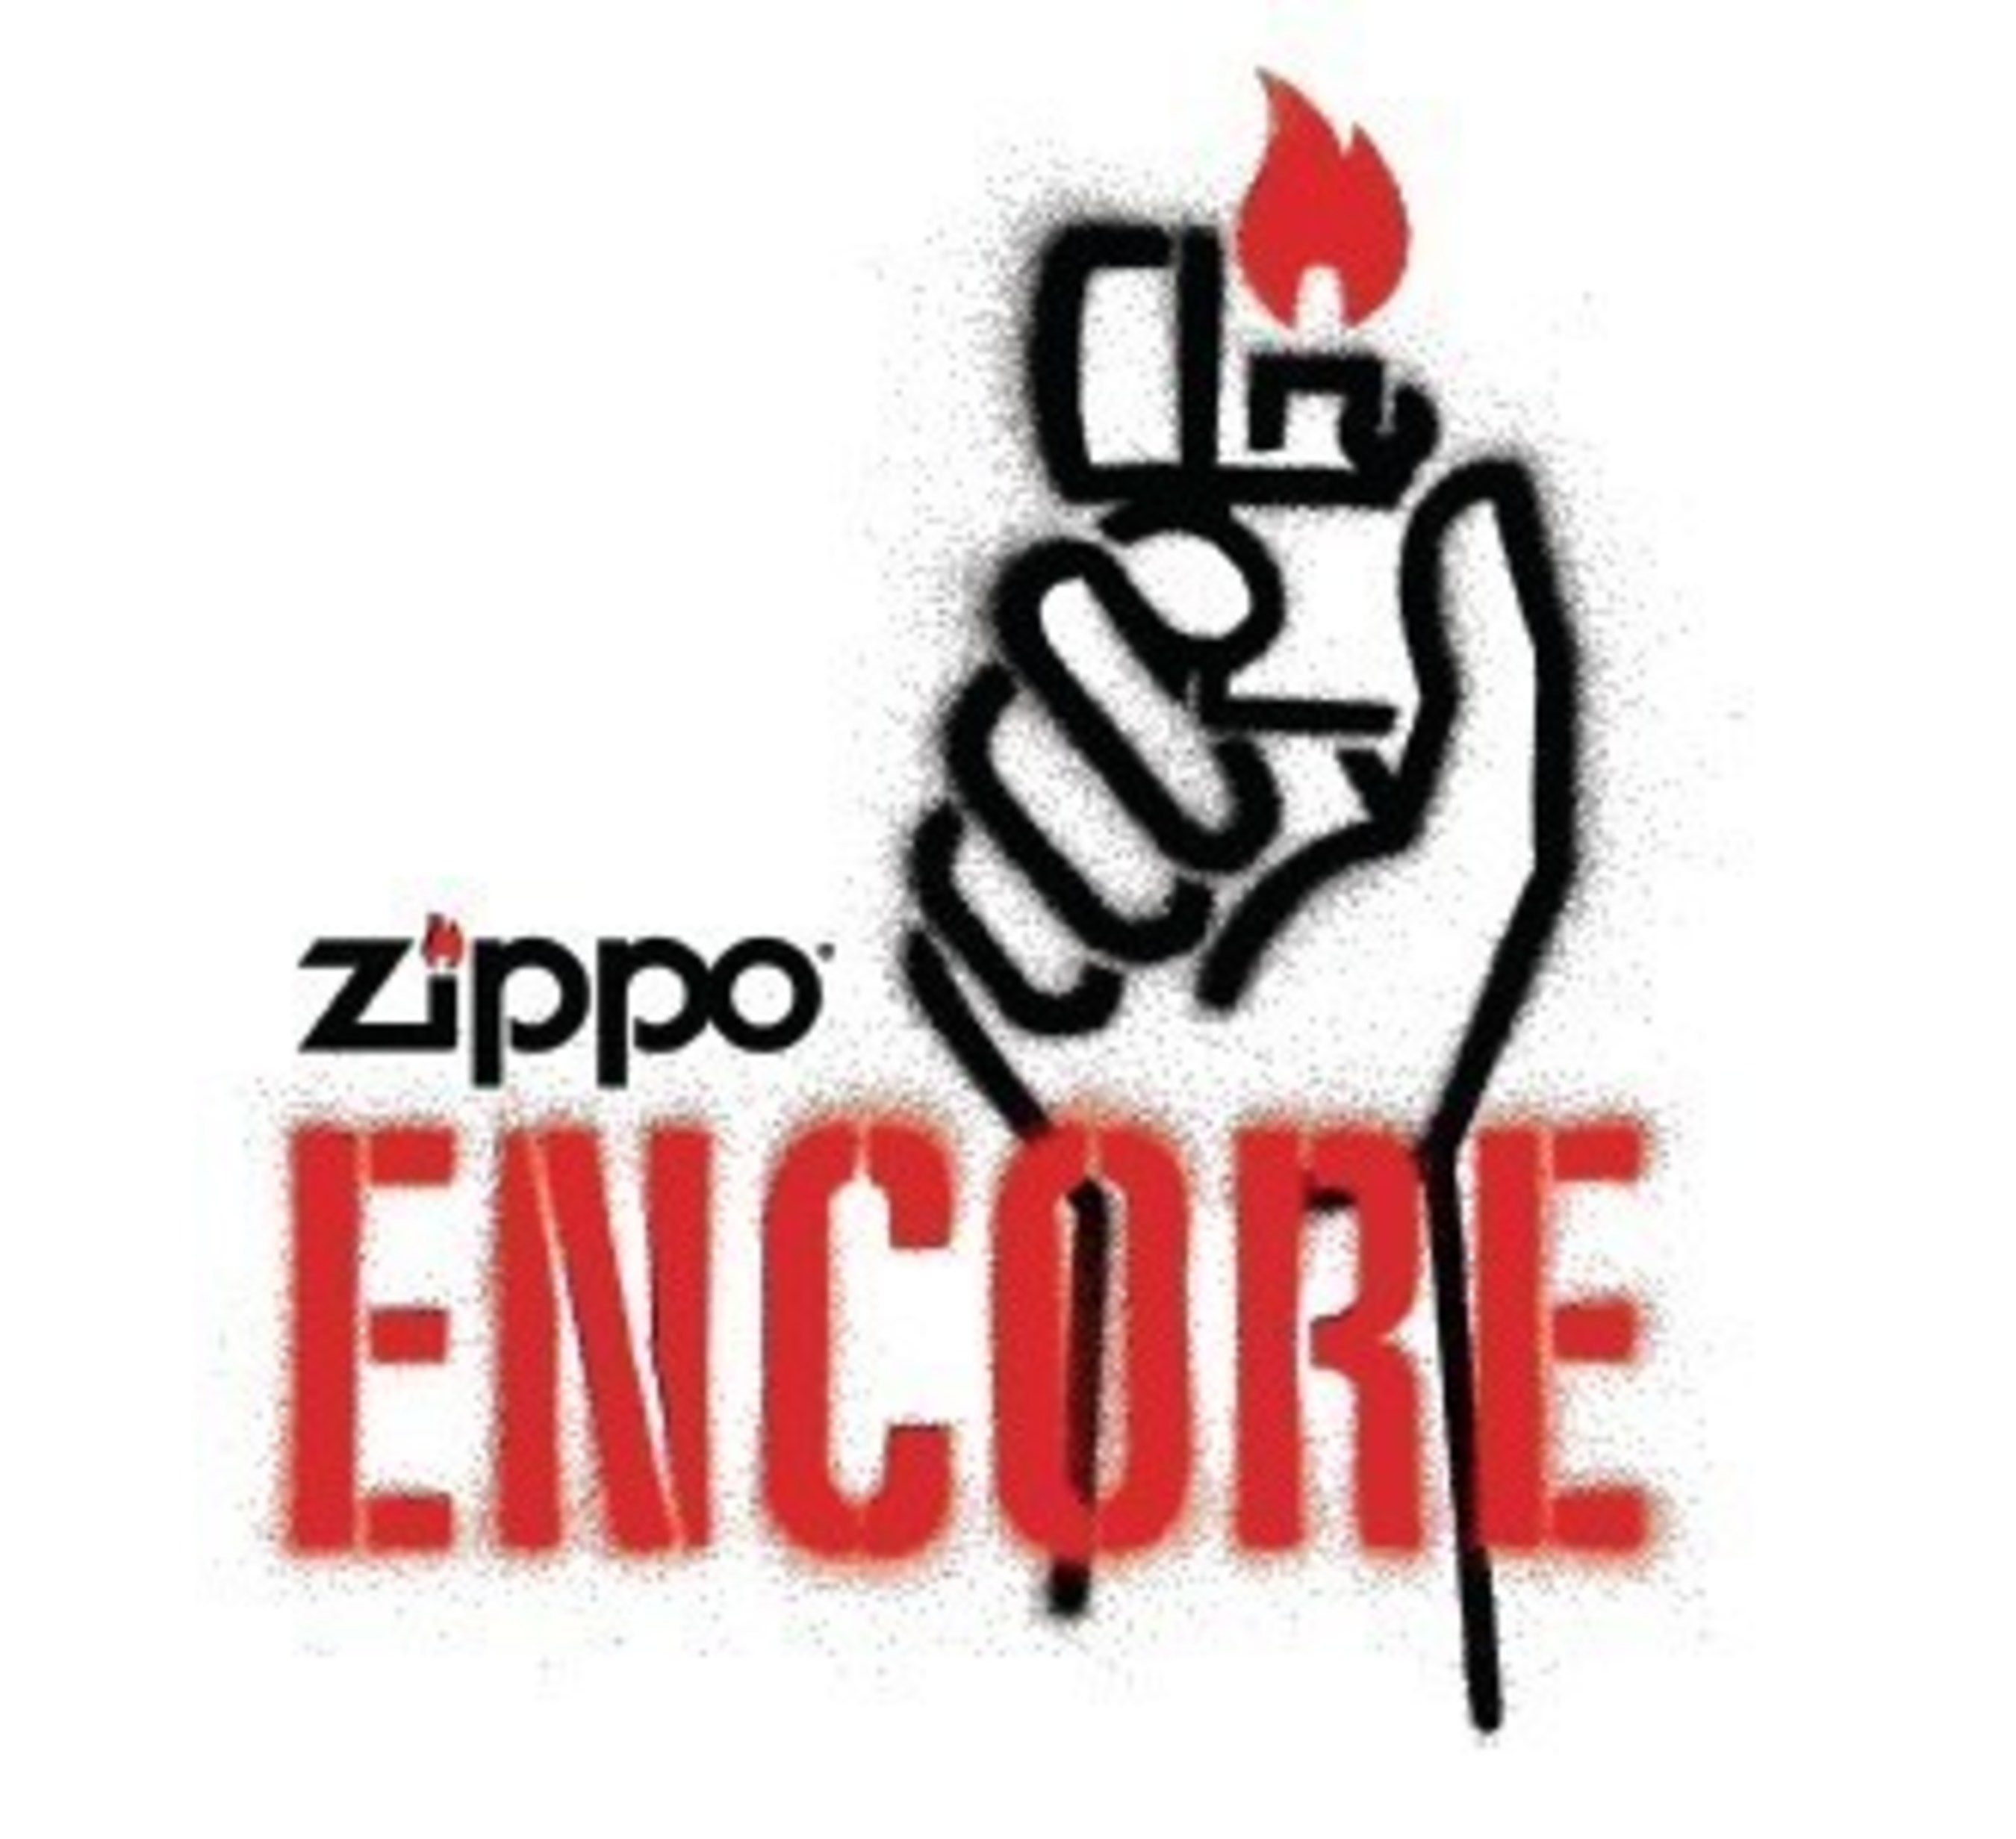 Zippo Encore